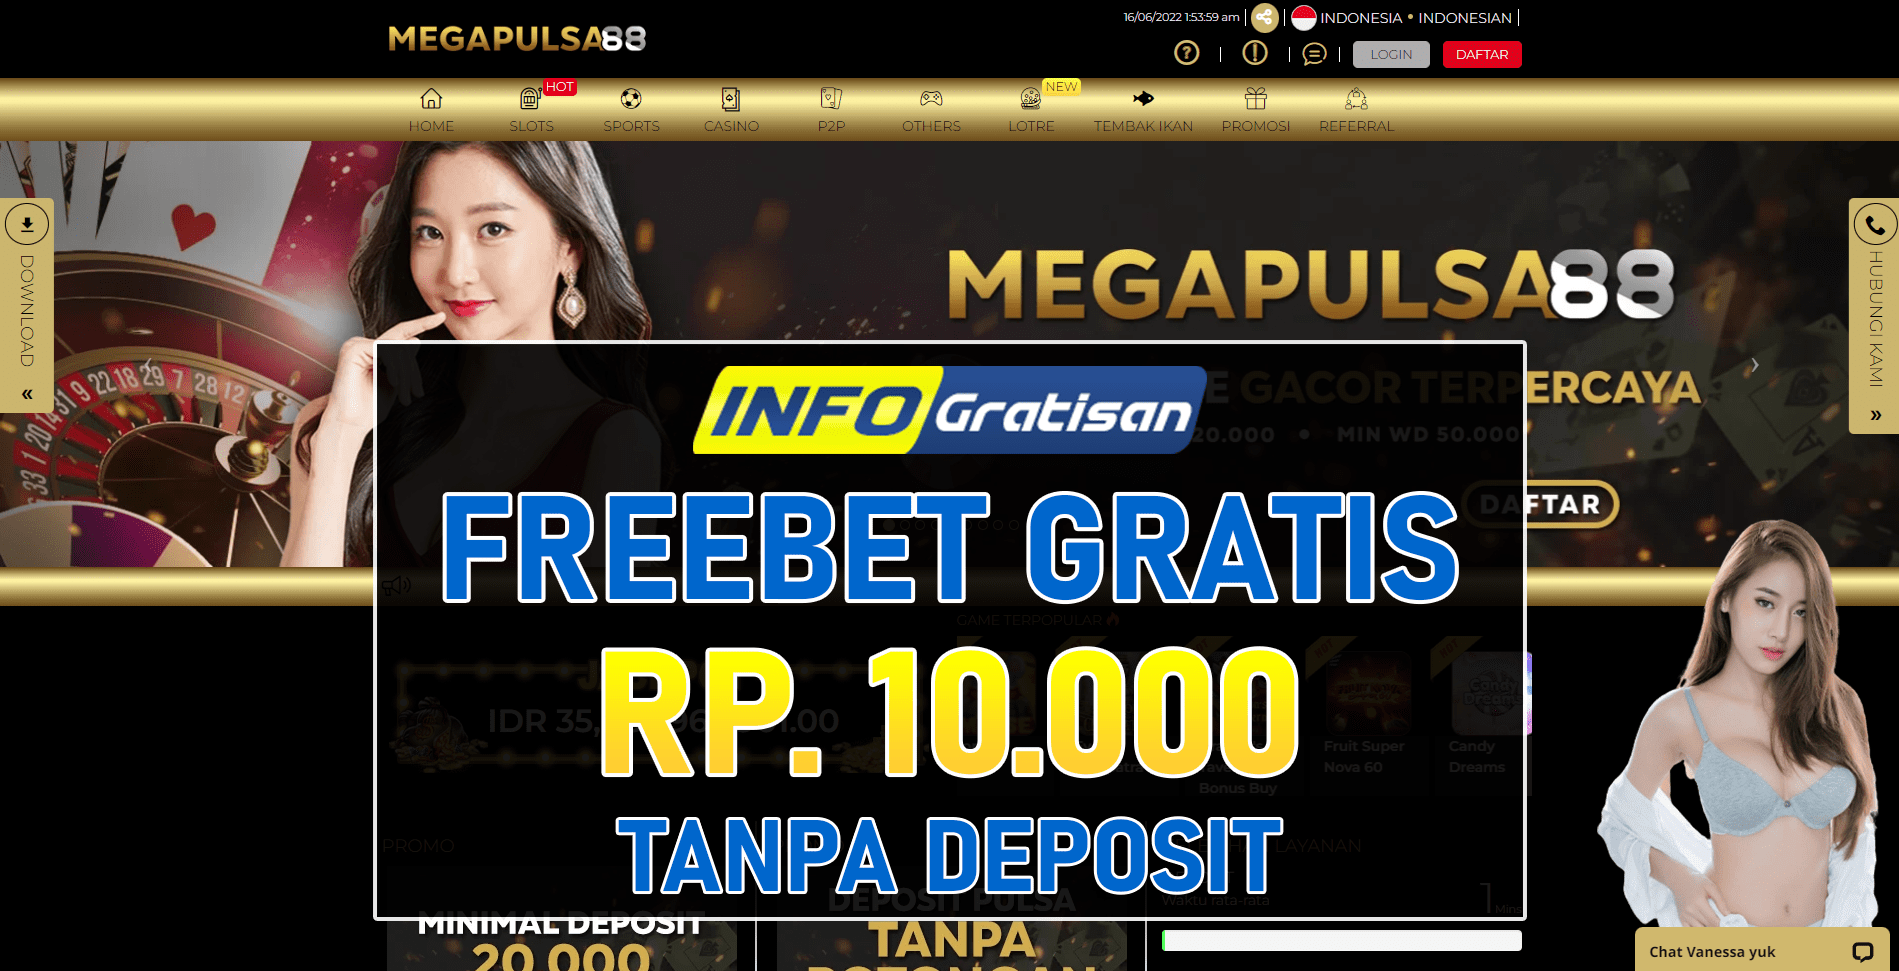 Freebet Gratis Megapulsa88